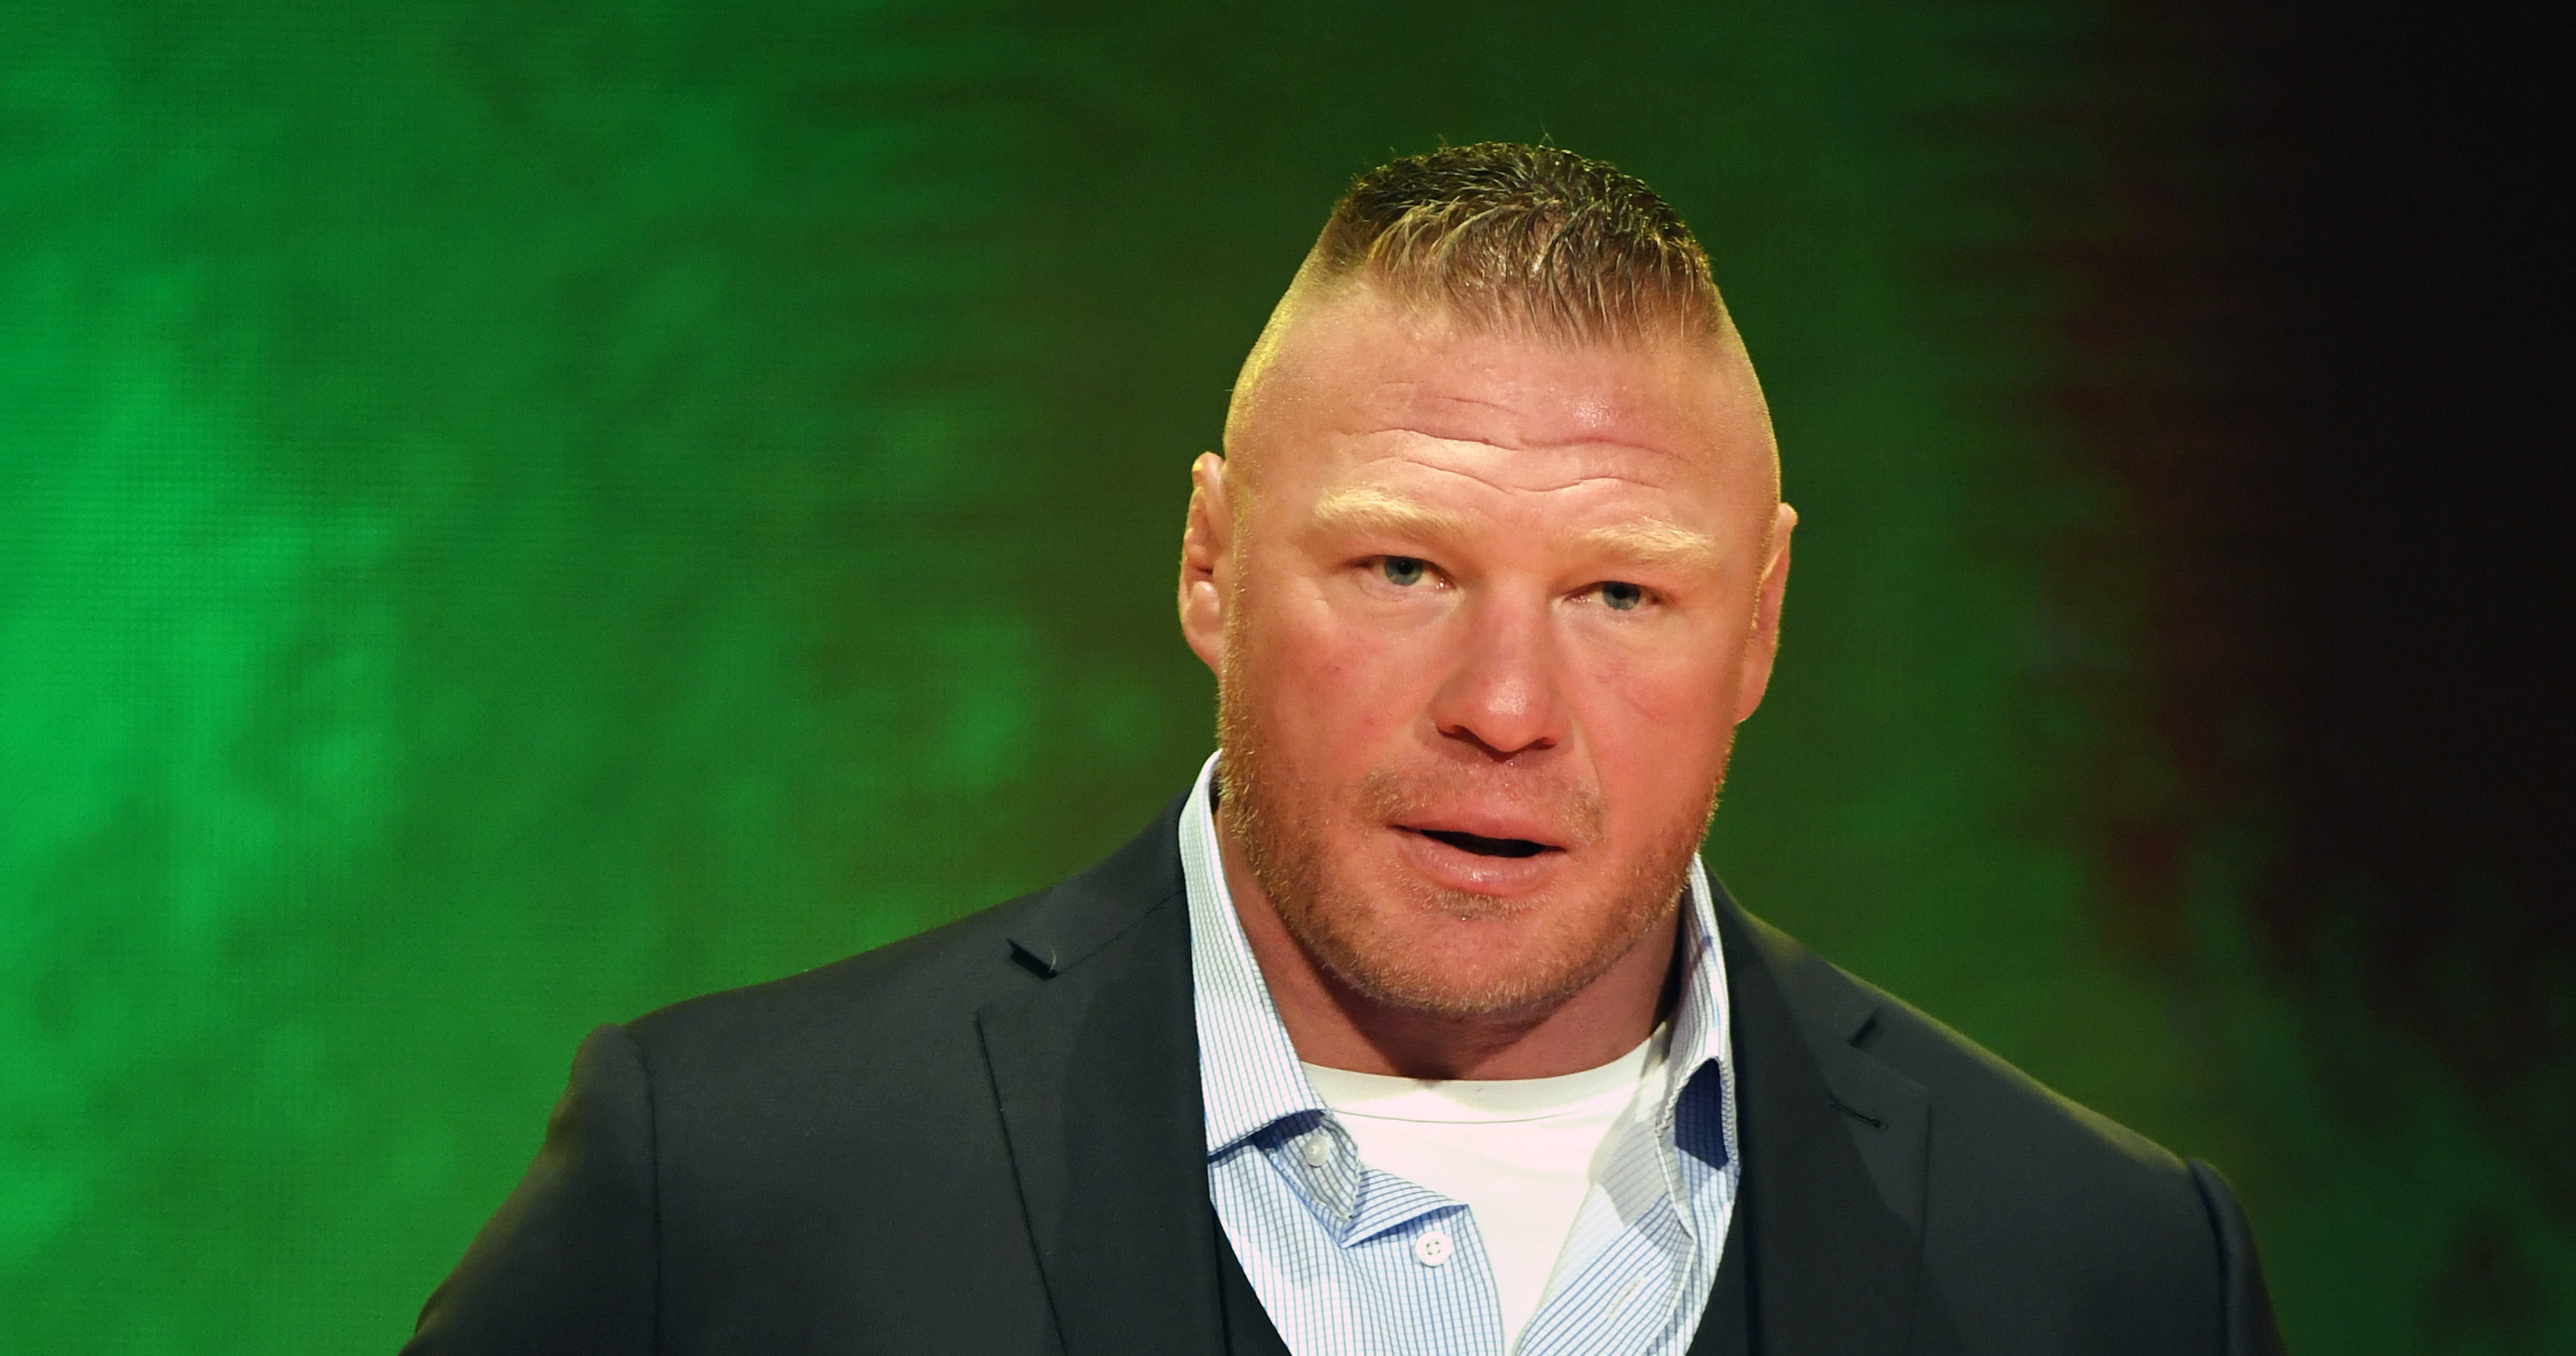 Wwe Rumors Brock Lesnar S Return Becky Lynch At Hiac John Cena At Summerslam News Scores